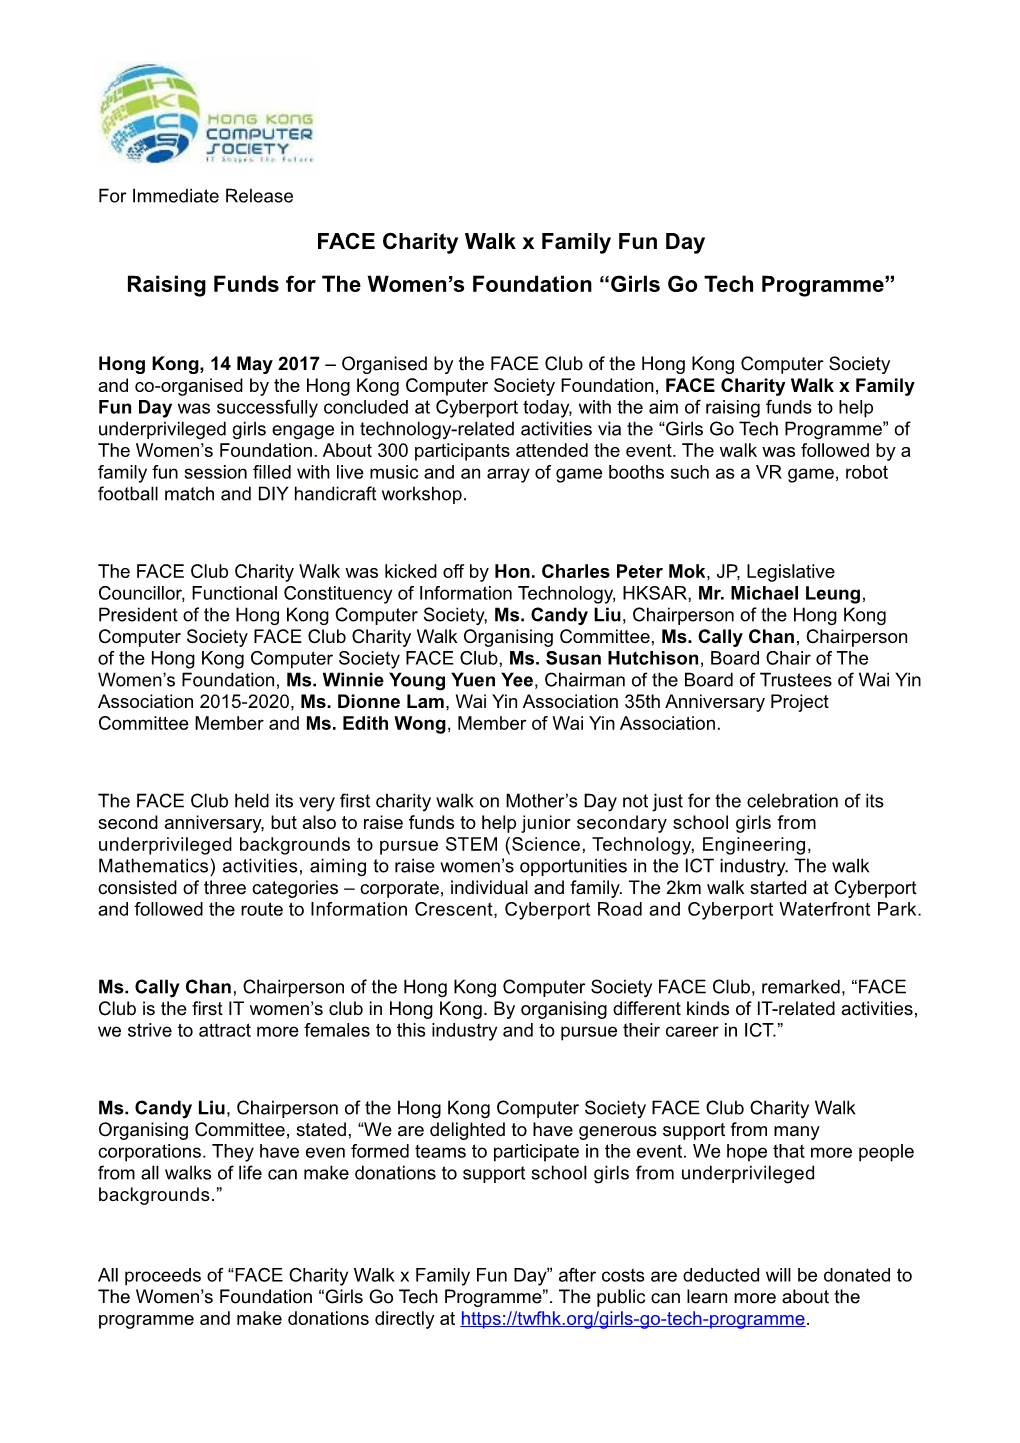 FACE Charity Walk X Family Fun Day